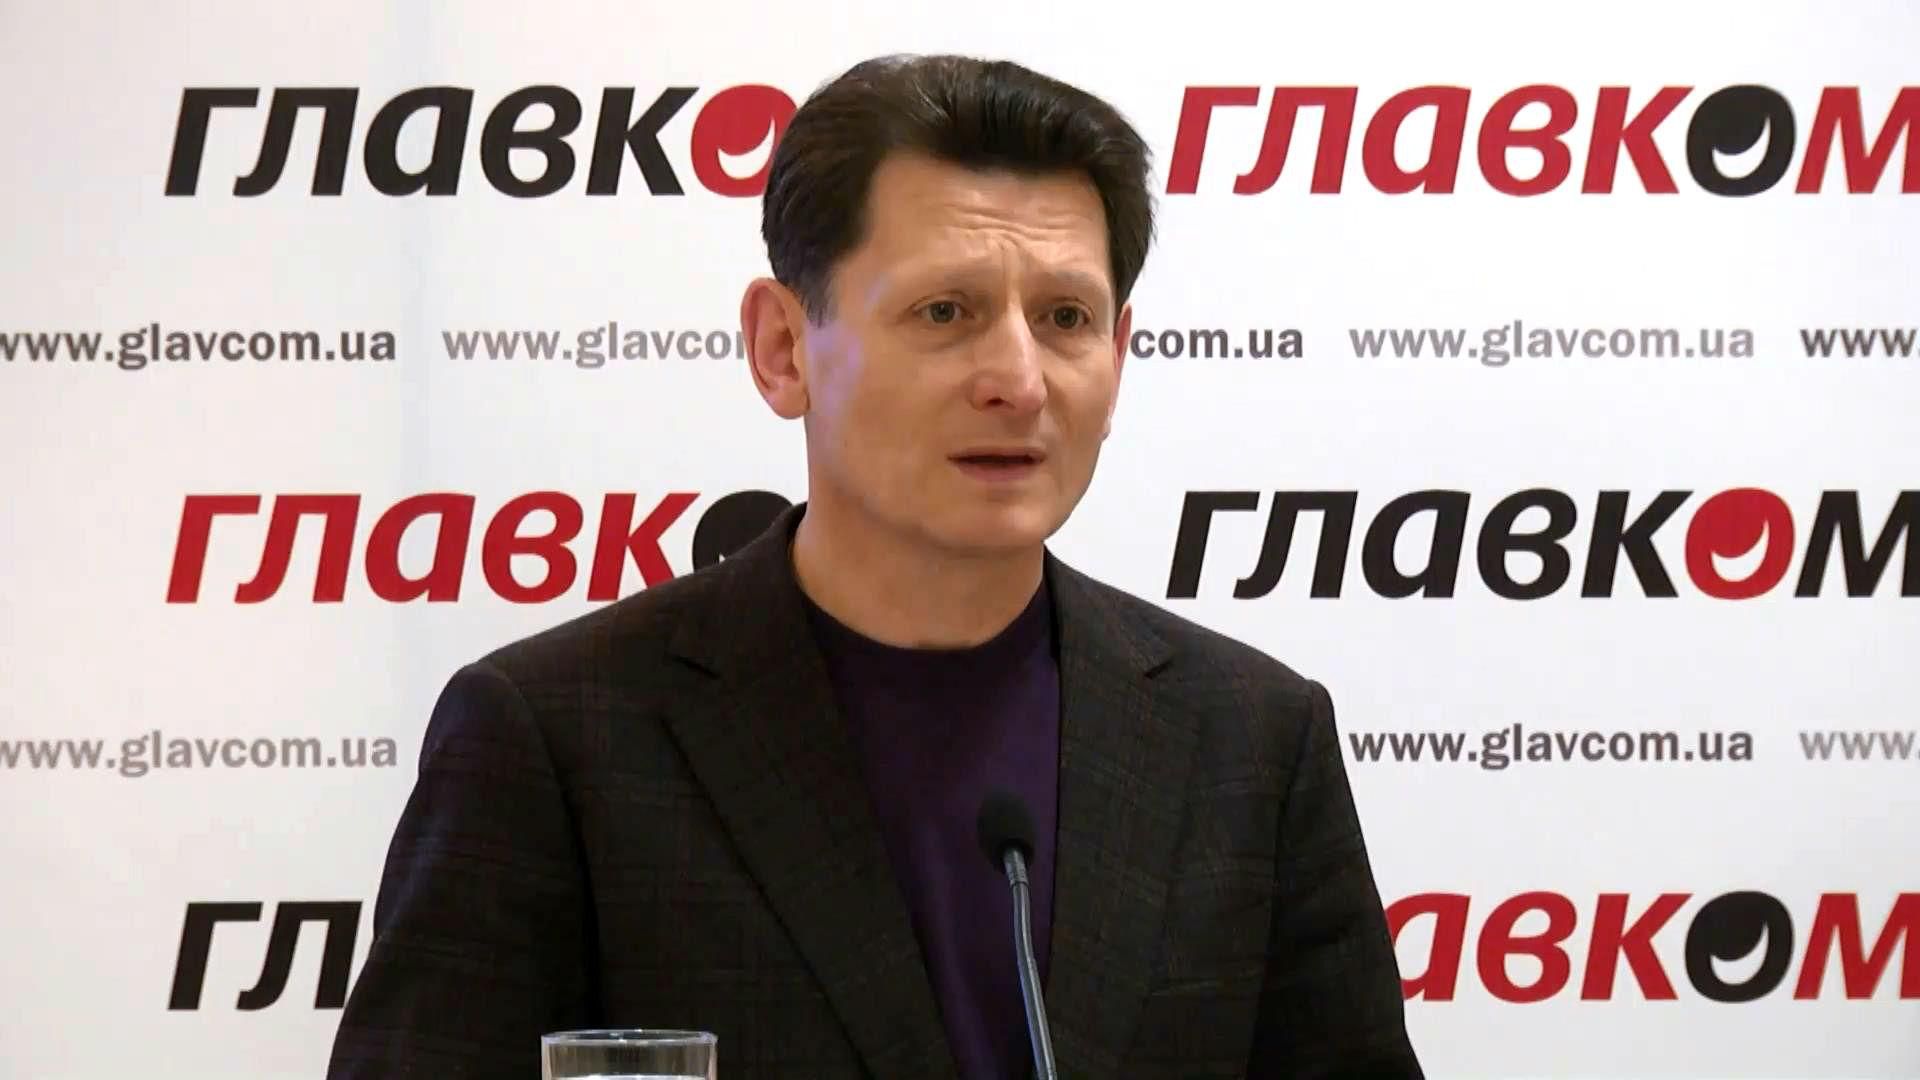 В Украине снова критическая ситуация с углем на ТЭС, — глава Независимого профсоюза горняков